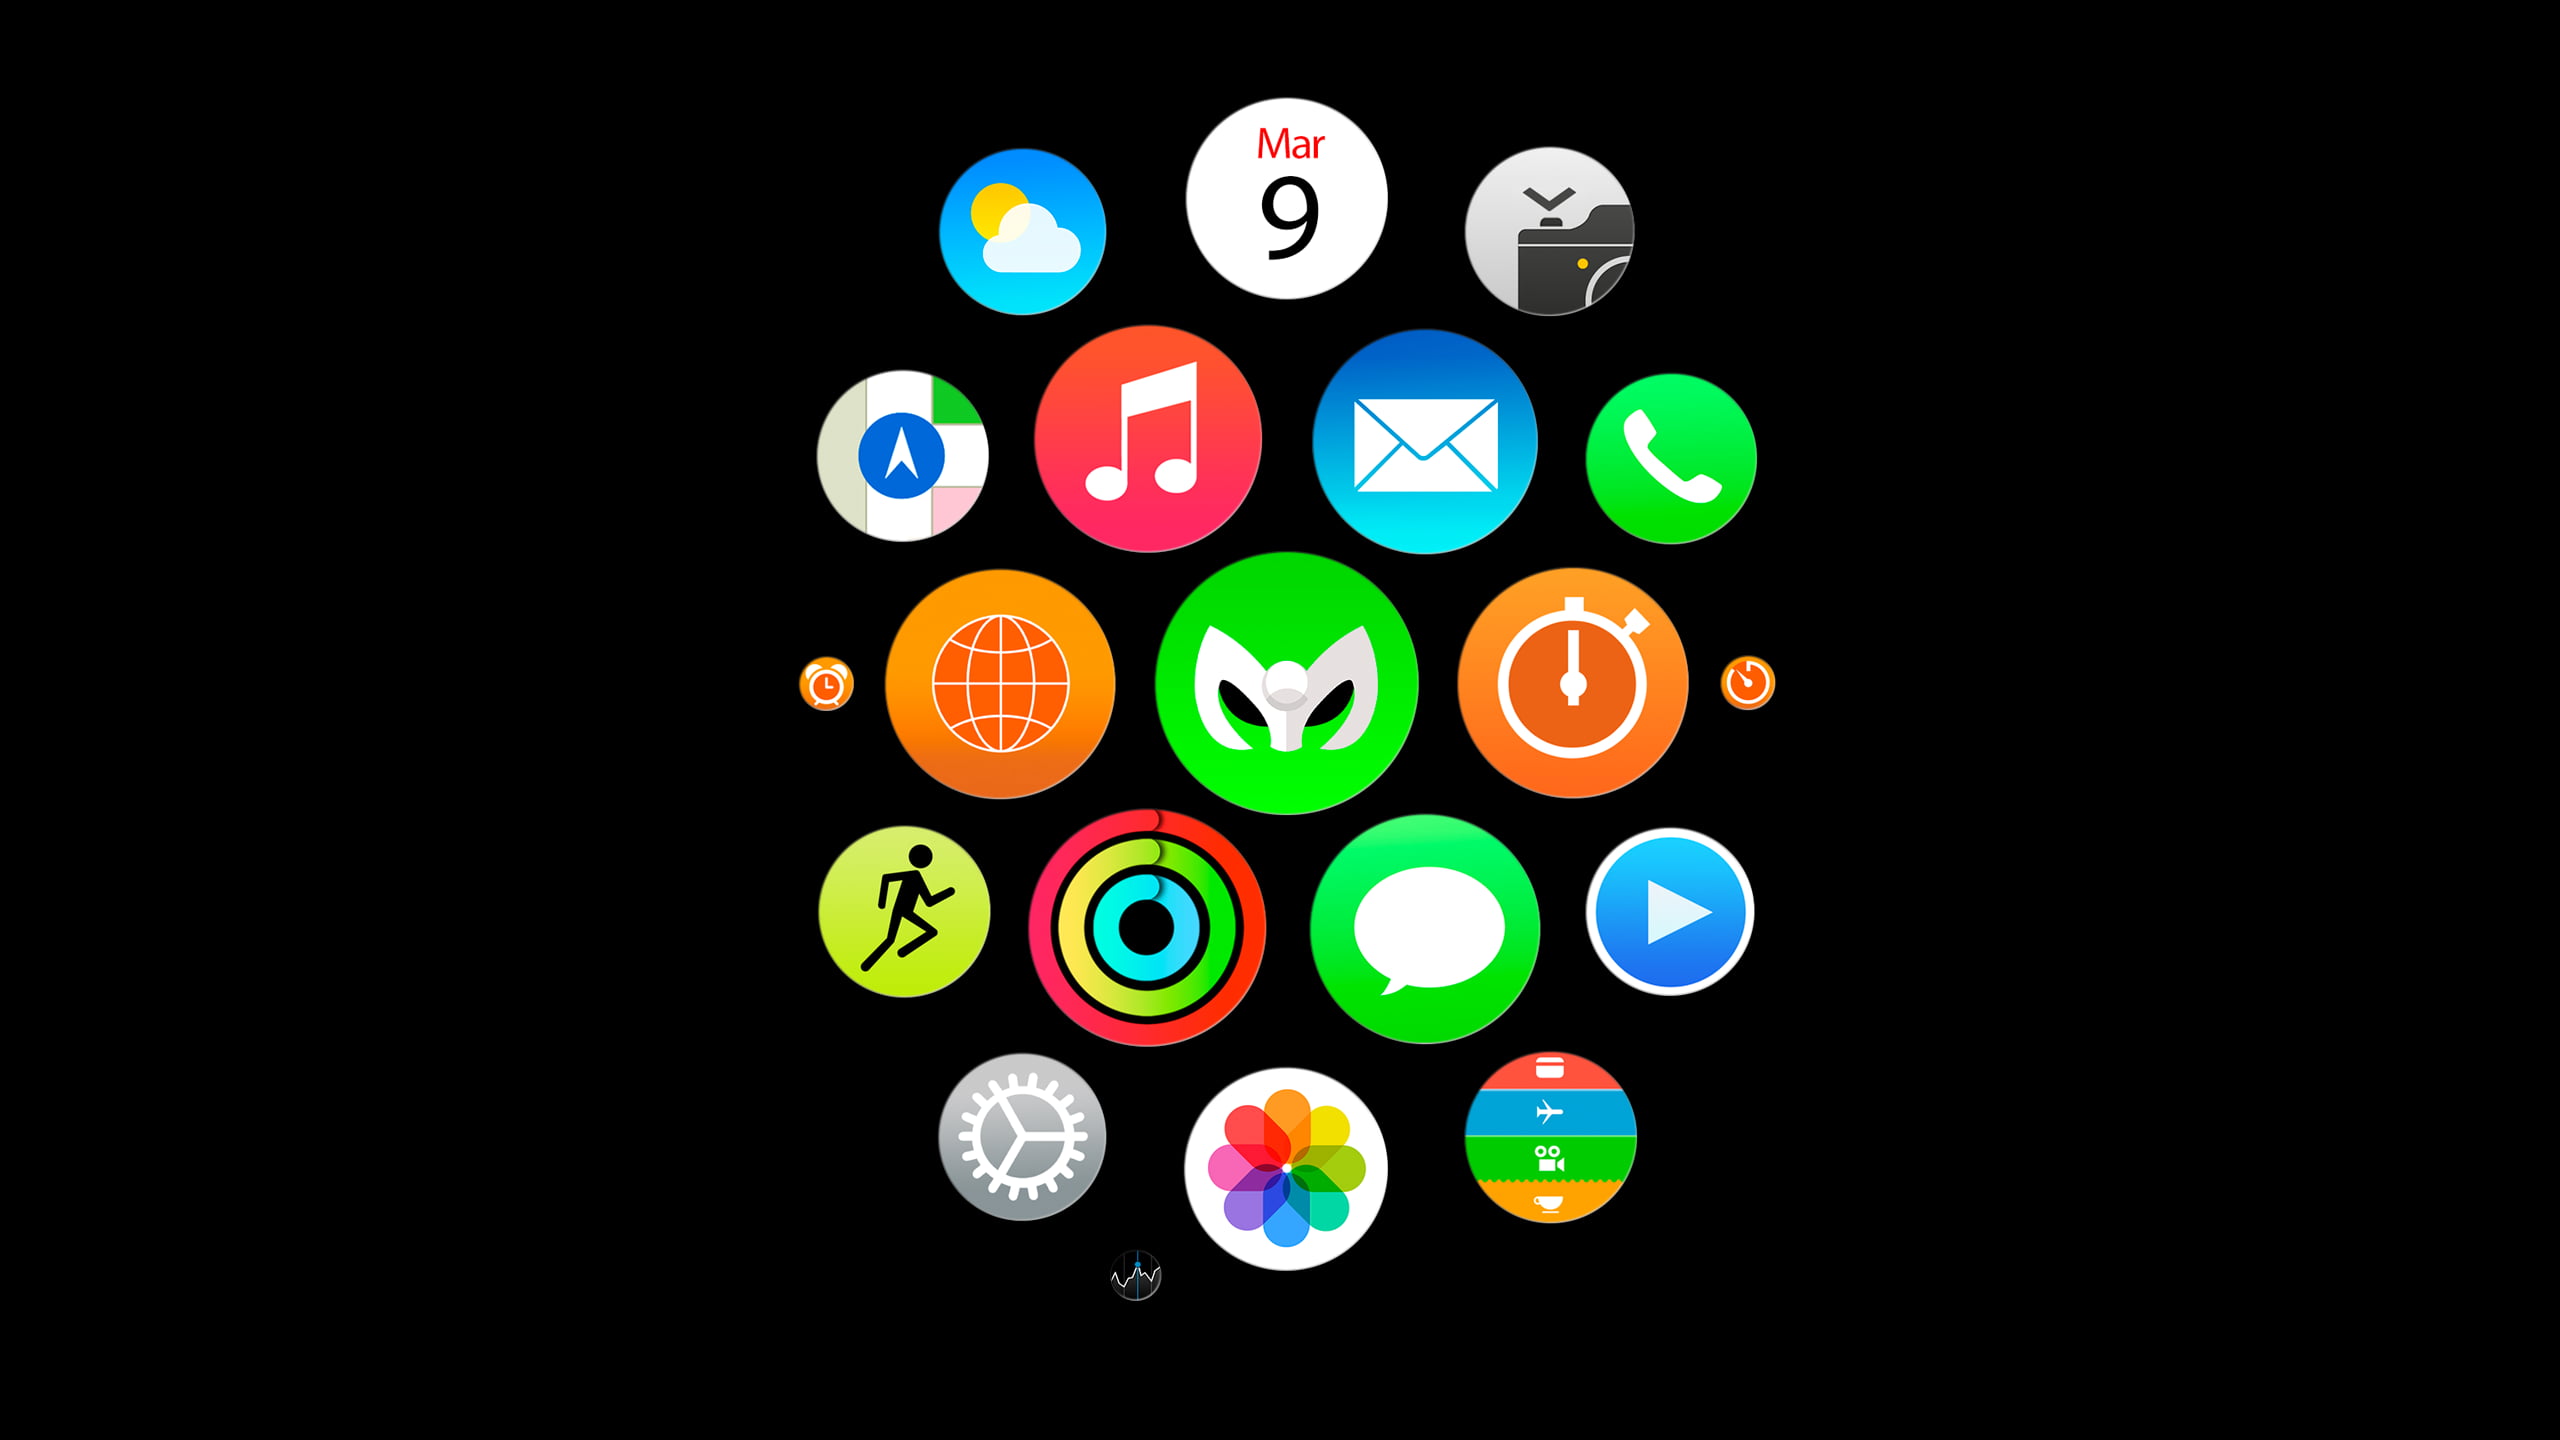 HD wallpaper: apple, watch 3, smartwatch, heart rate, technology, time,  communication | Wallpaper Flare